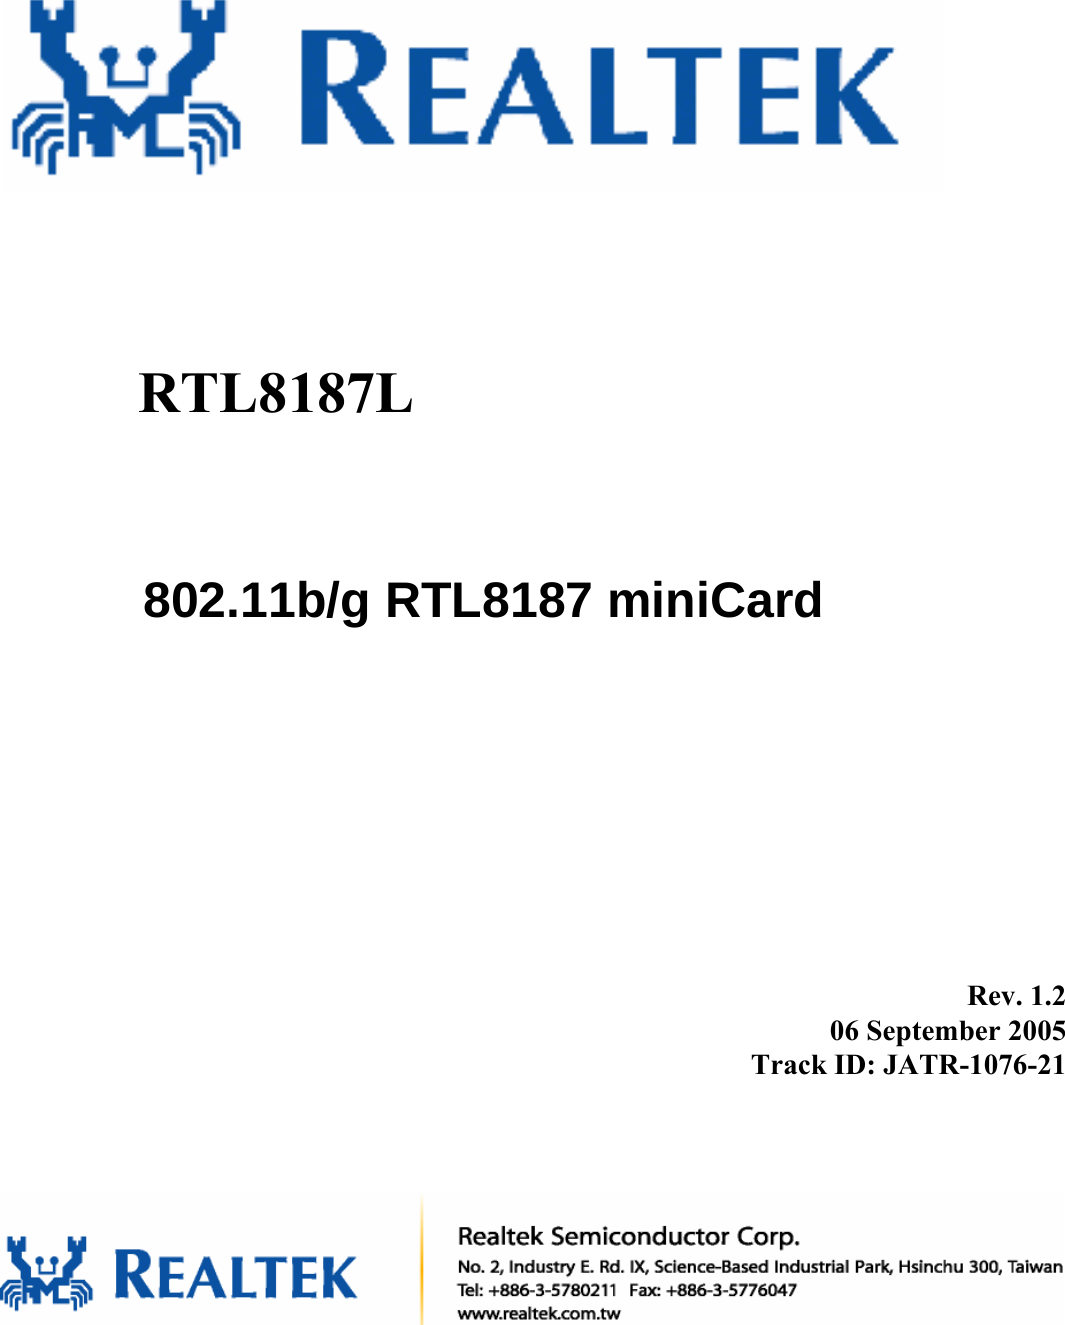 realtek rtl8187 wireless lan driver for windows 7 64 bit